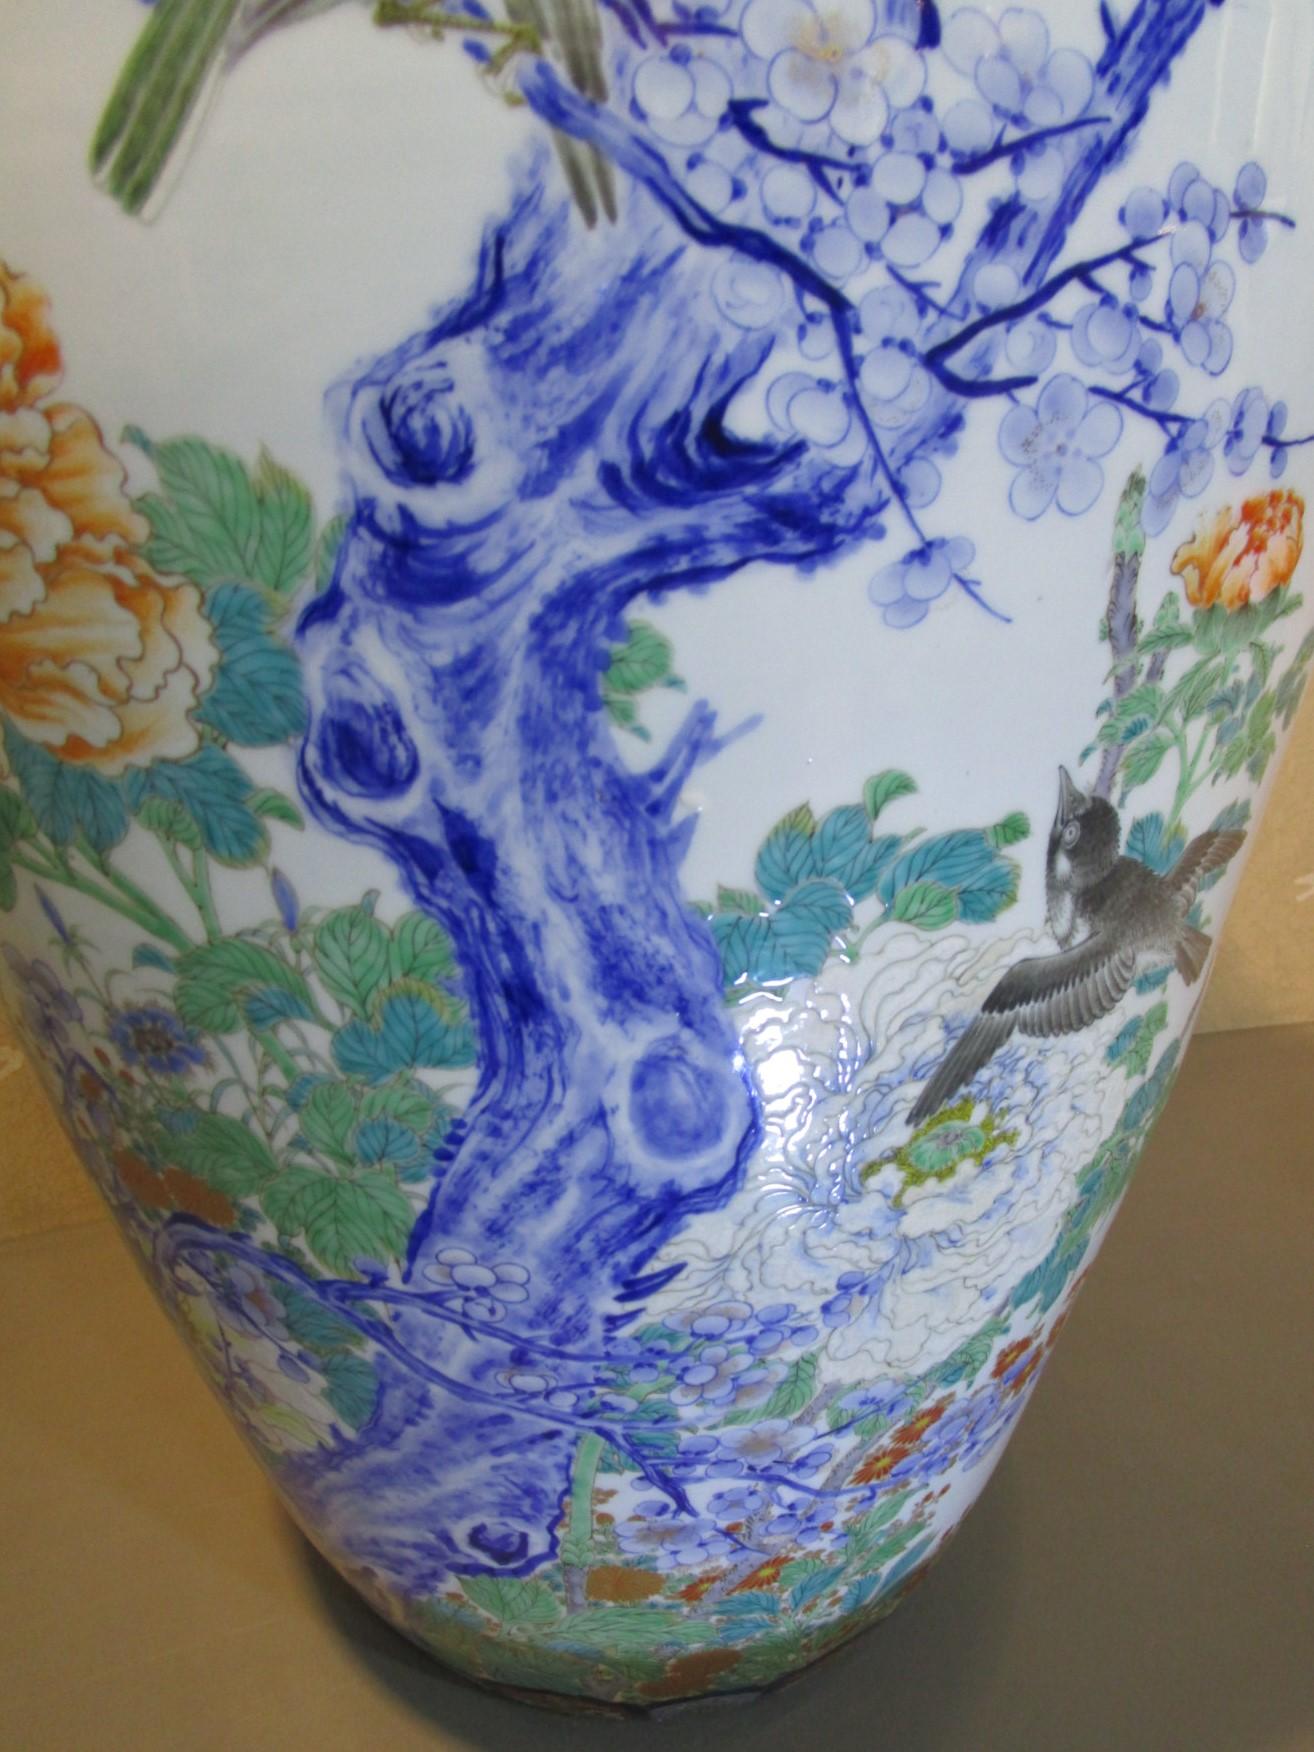 fukagawa porcelain marks